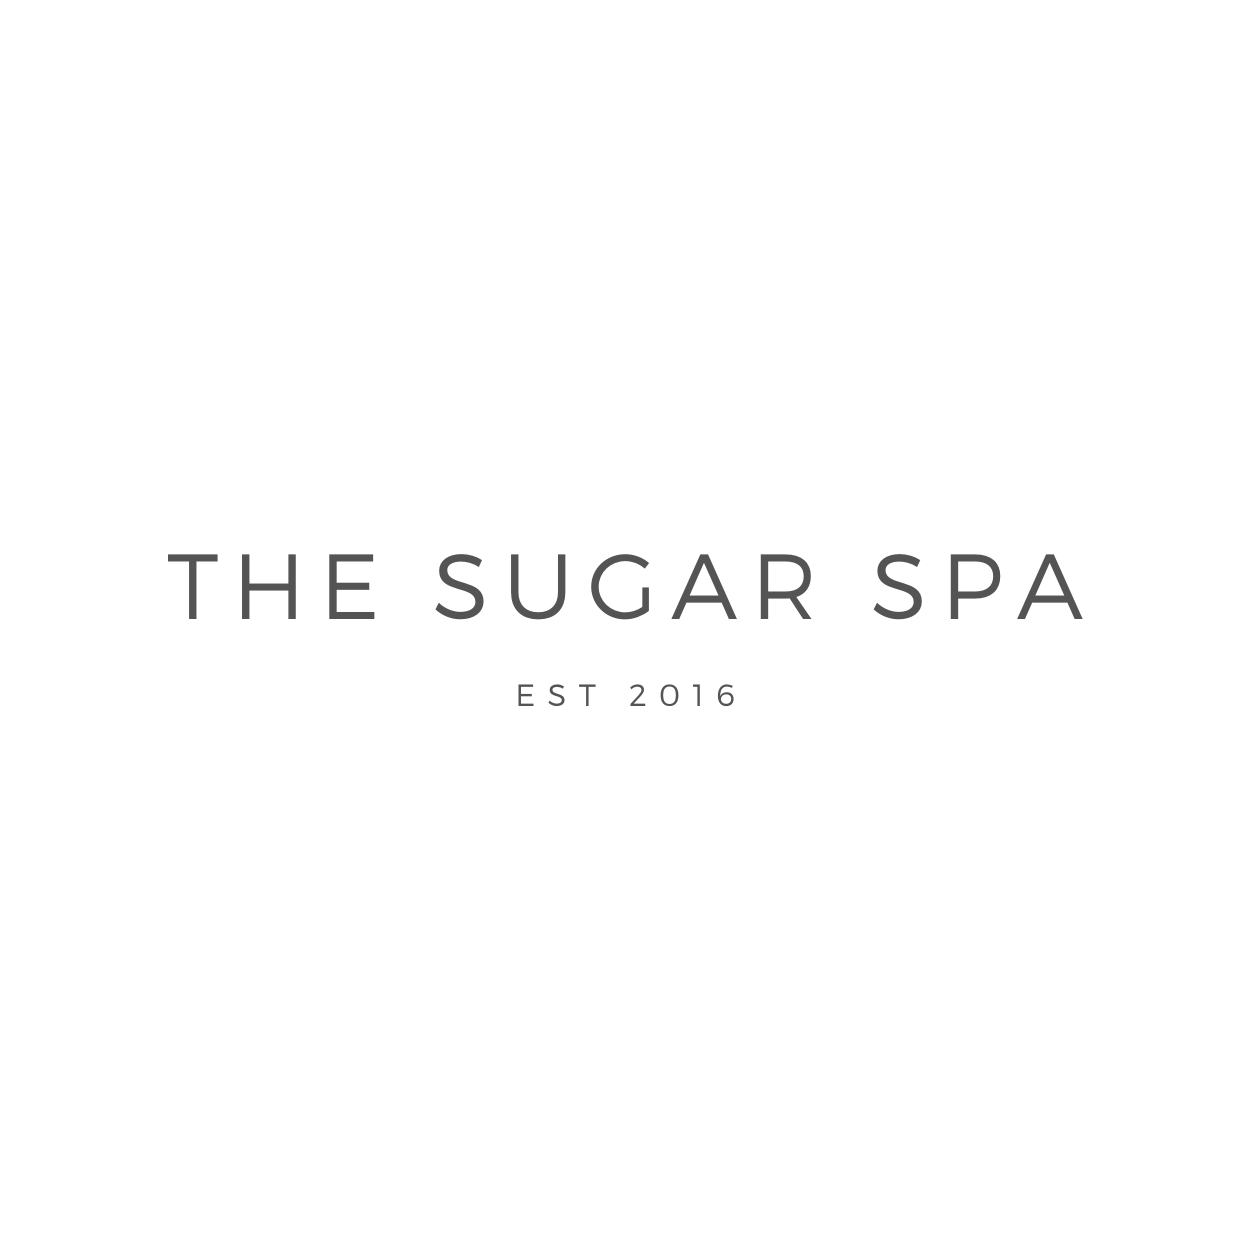 The Sugar Spa